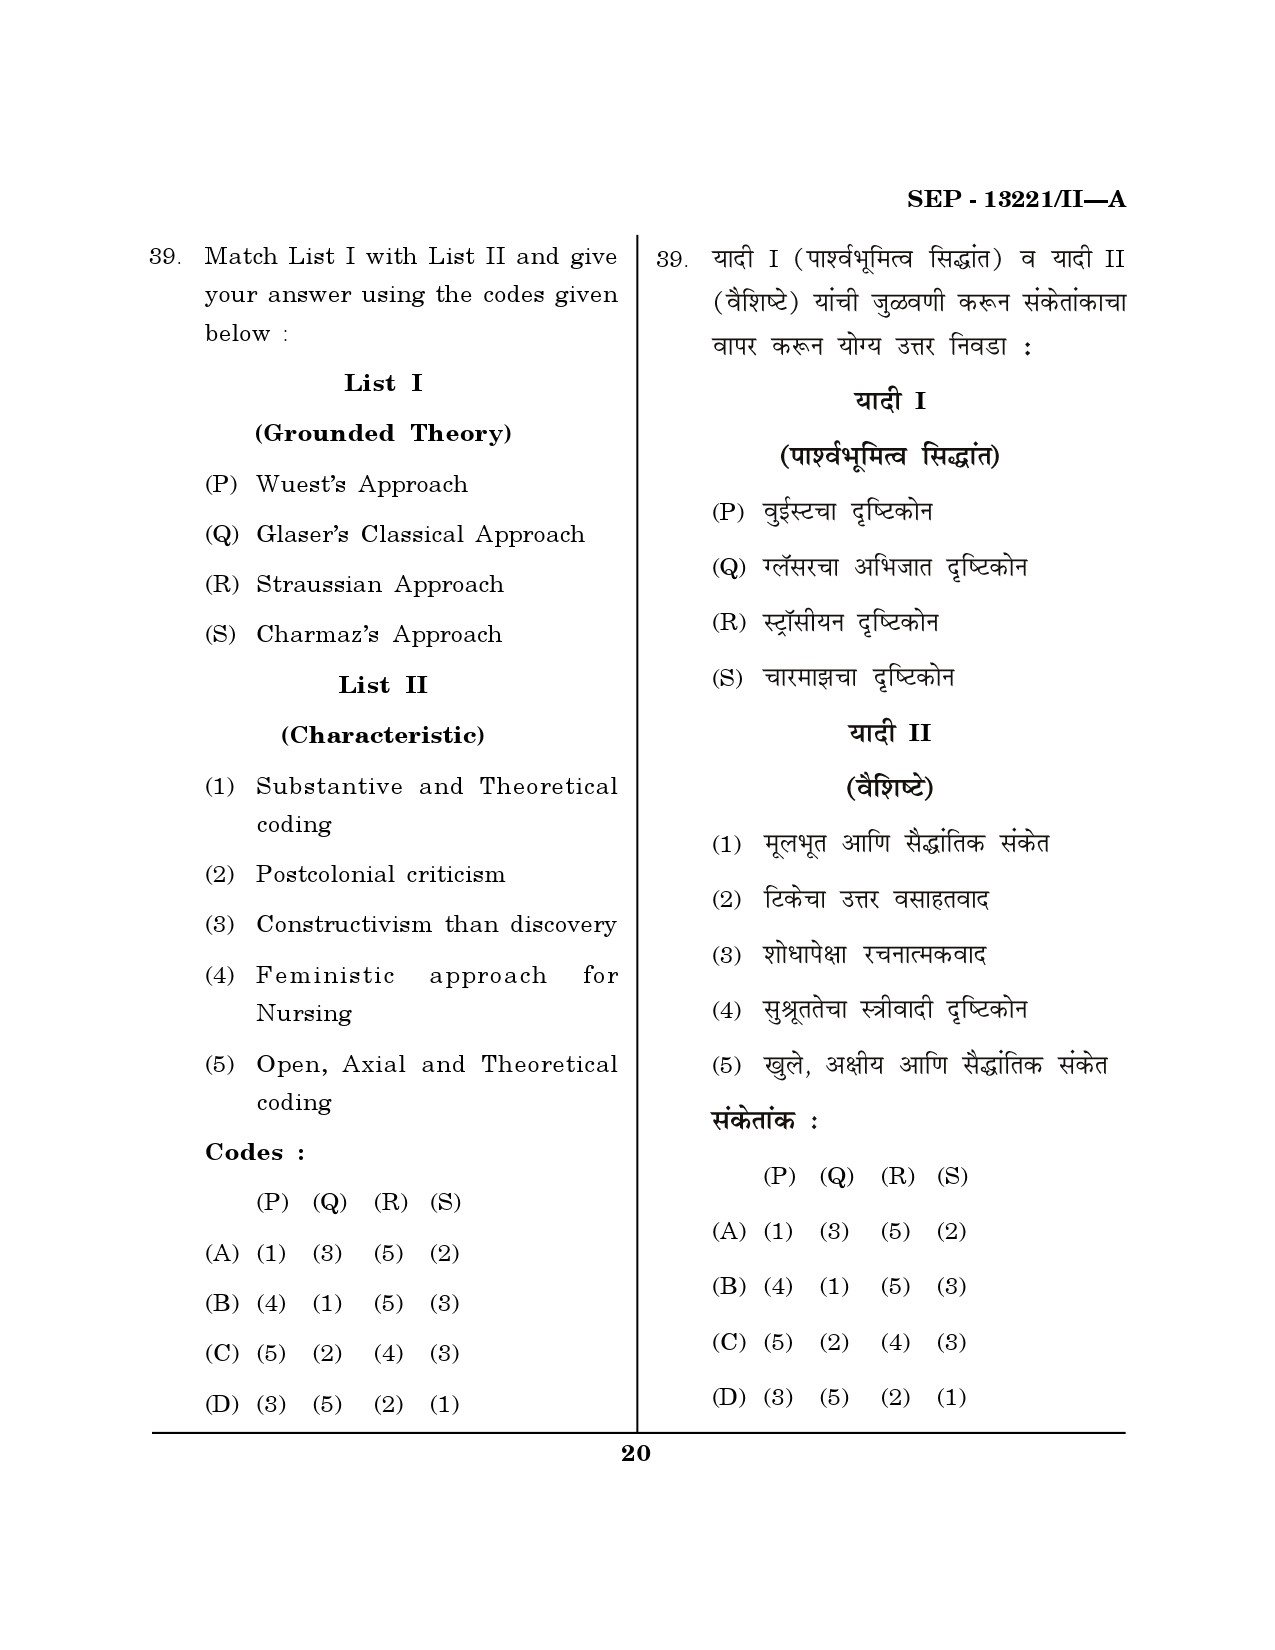 Maharashtra SET Psychology Exam Question Paper September 2021 19